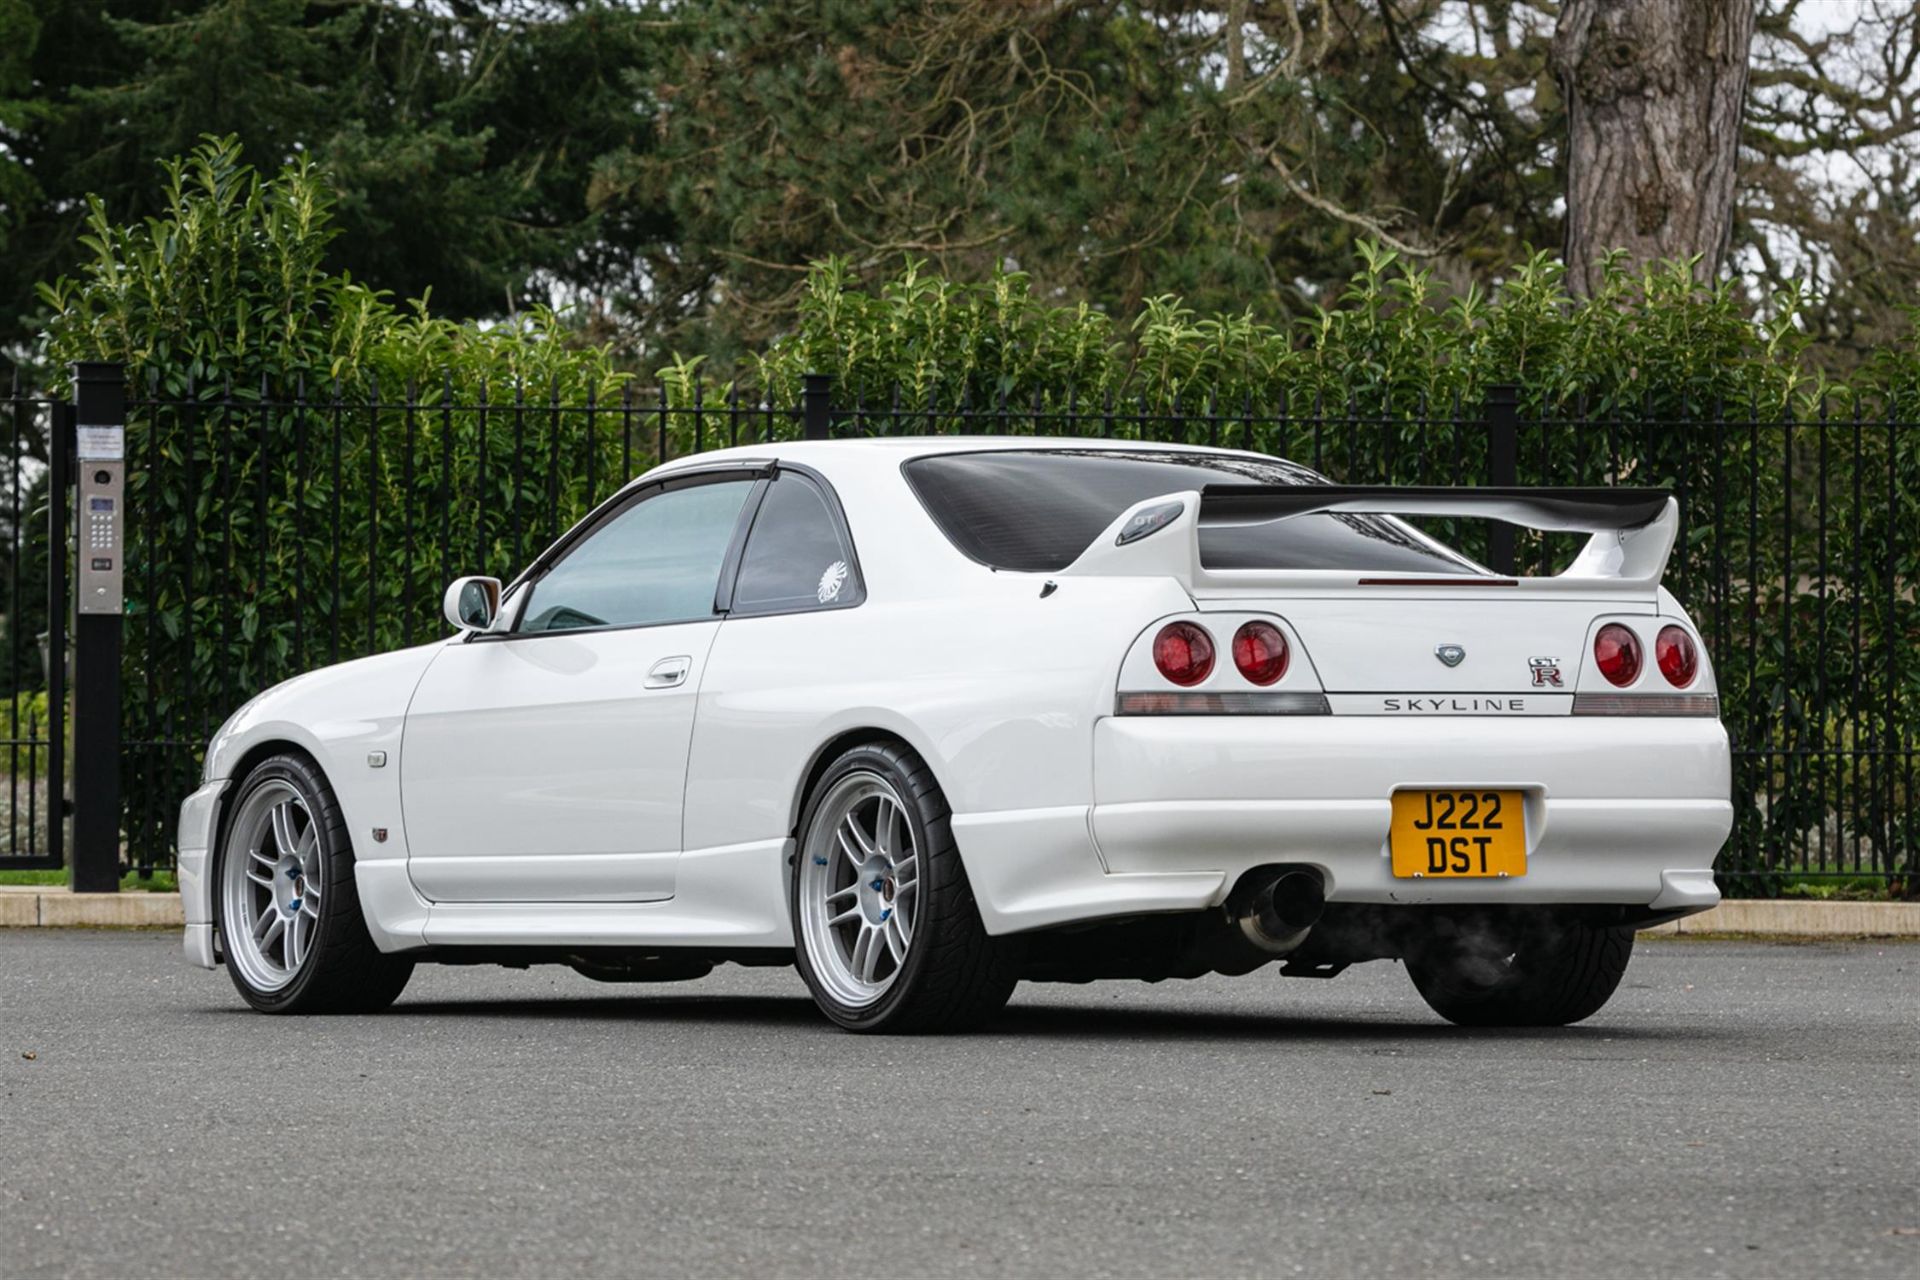 1995 Nissan Skyline R33 GT-R - Image 4 of 10